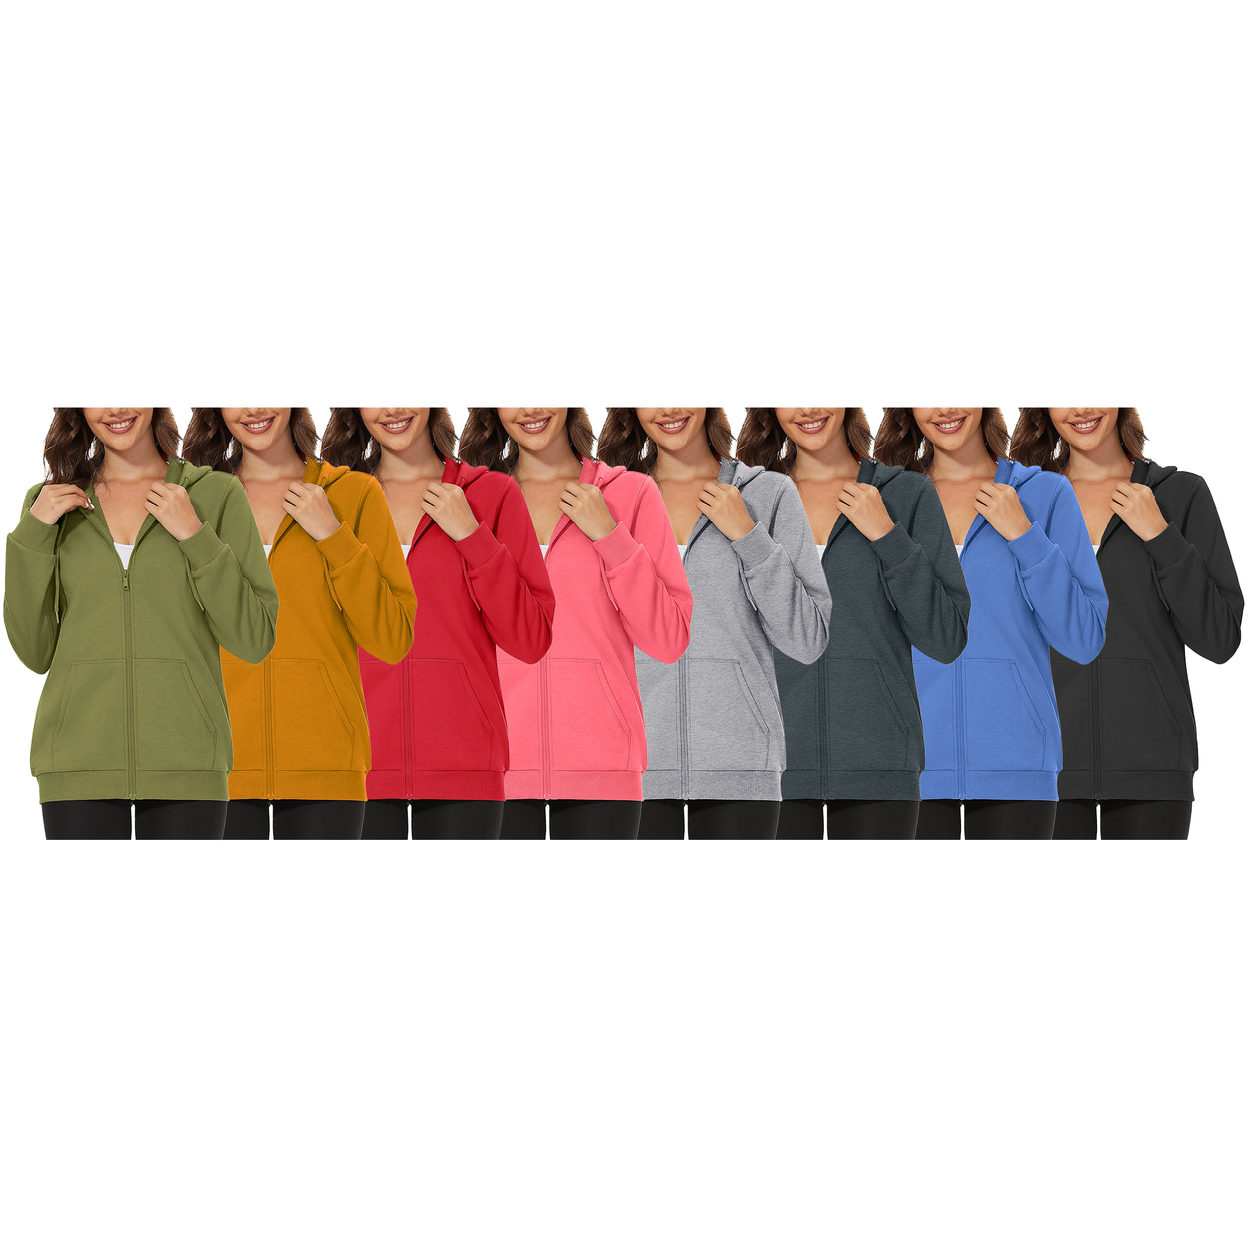 Women's Winter Warm Soft Blend Fleece Lined Full Zip Up Hoodie - Charcoal, Xx-large